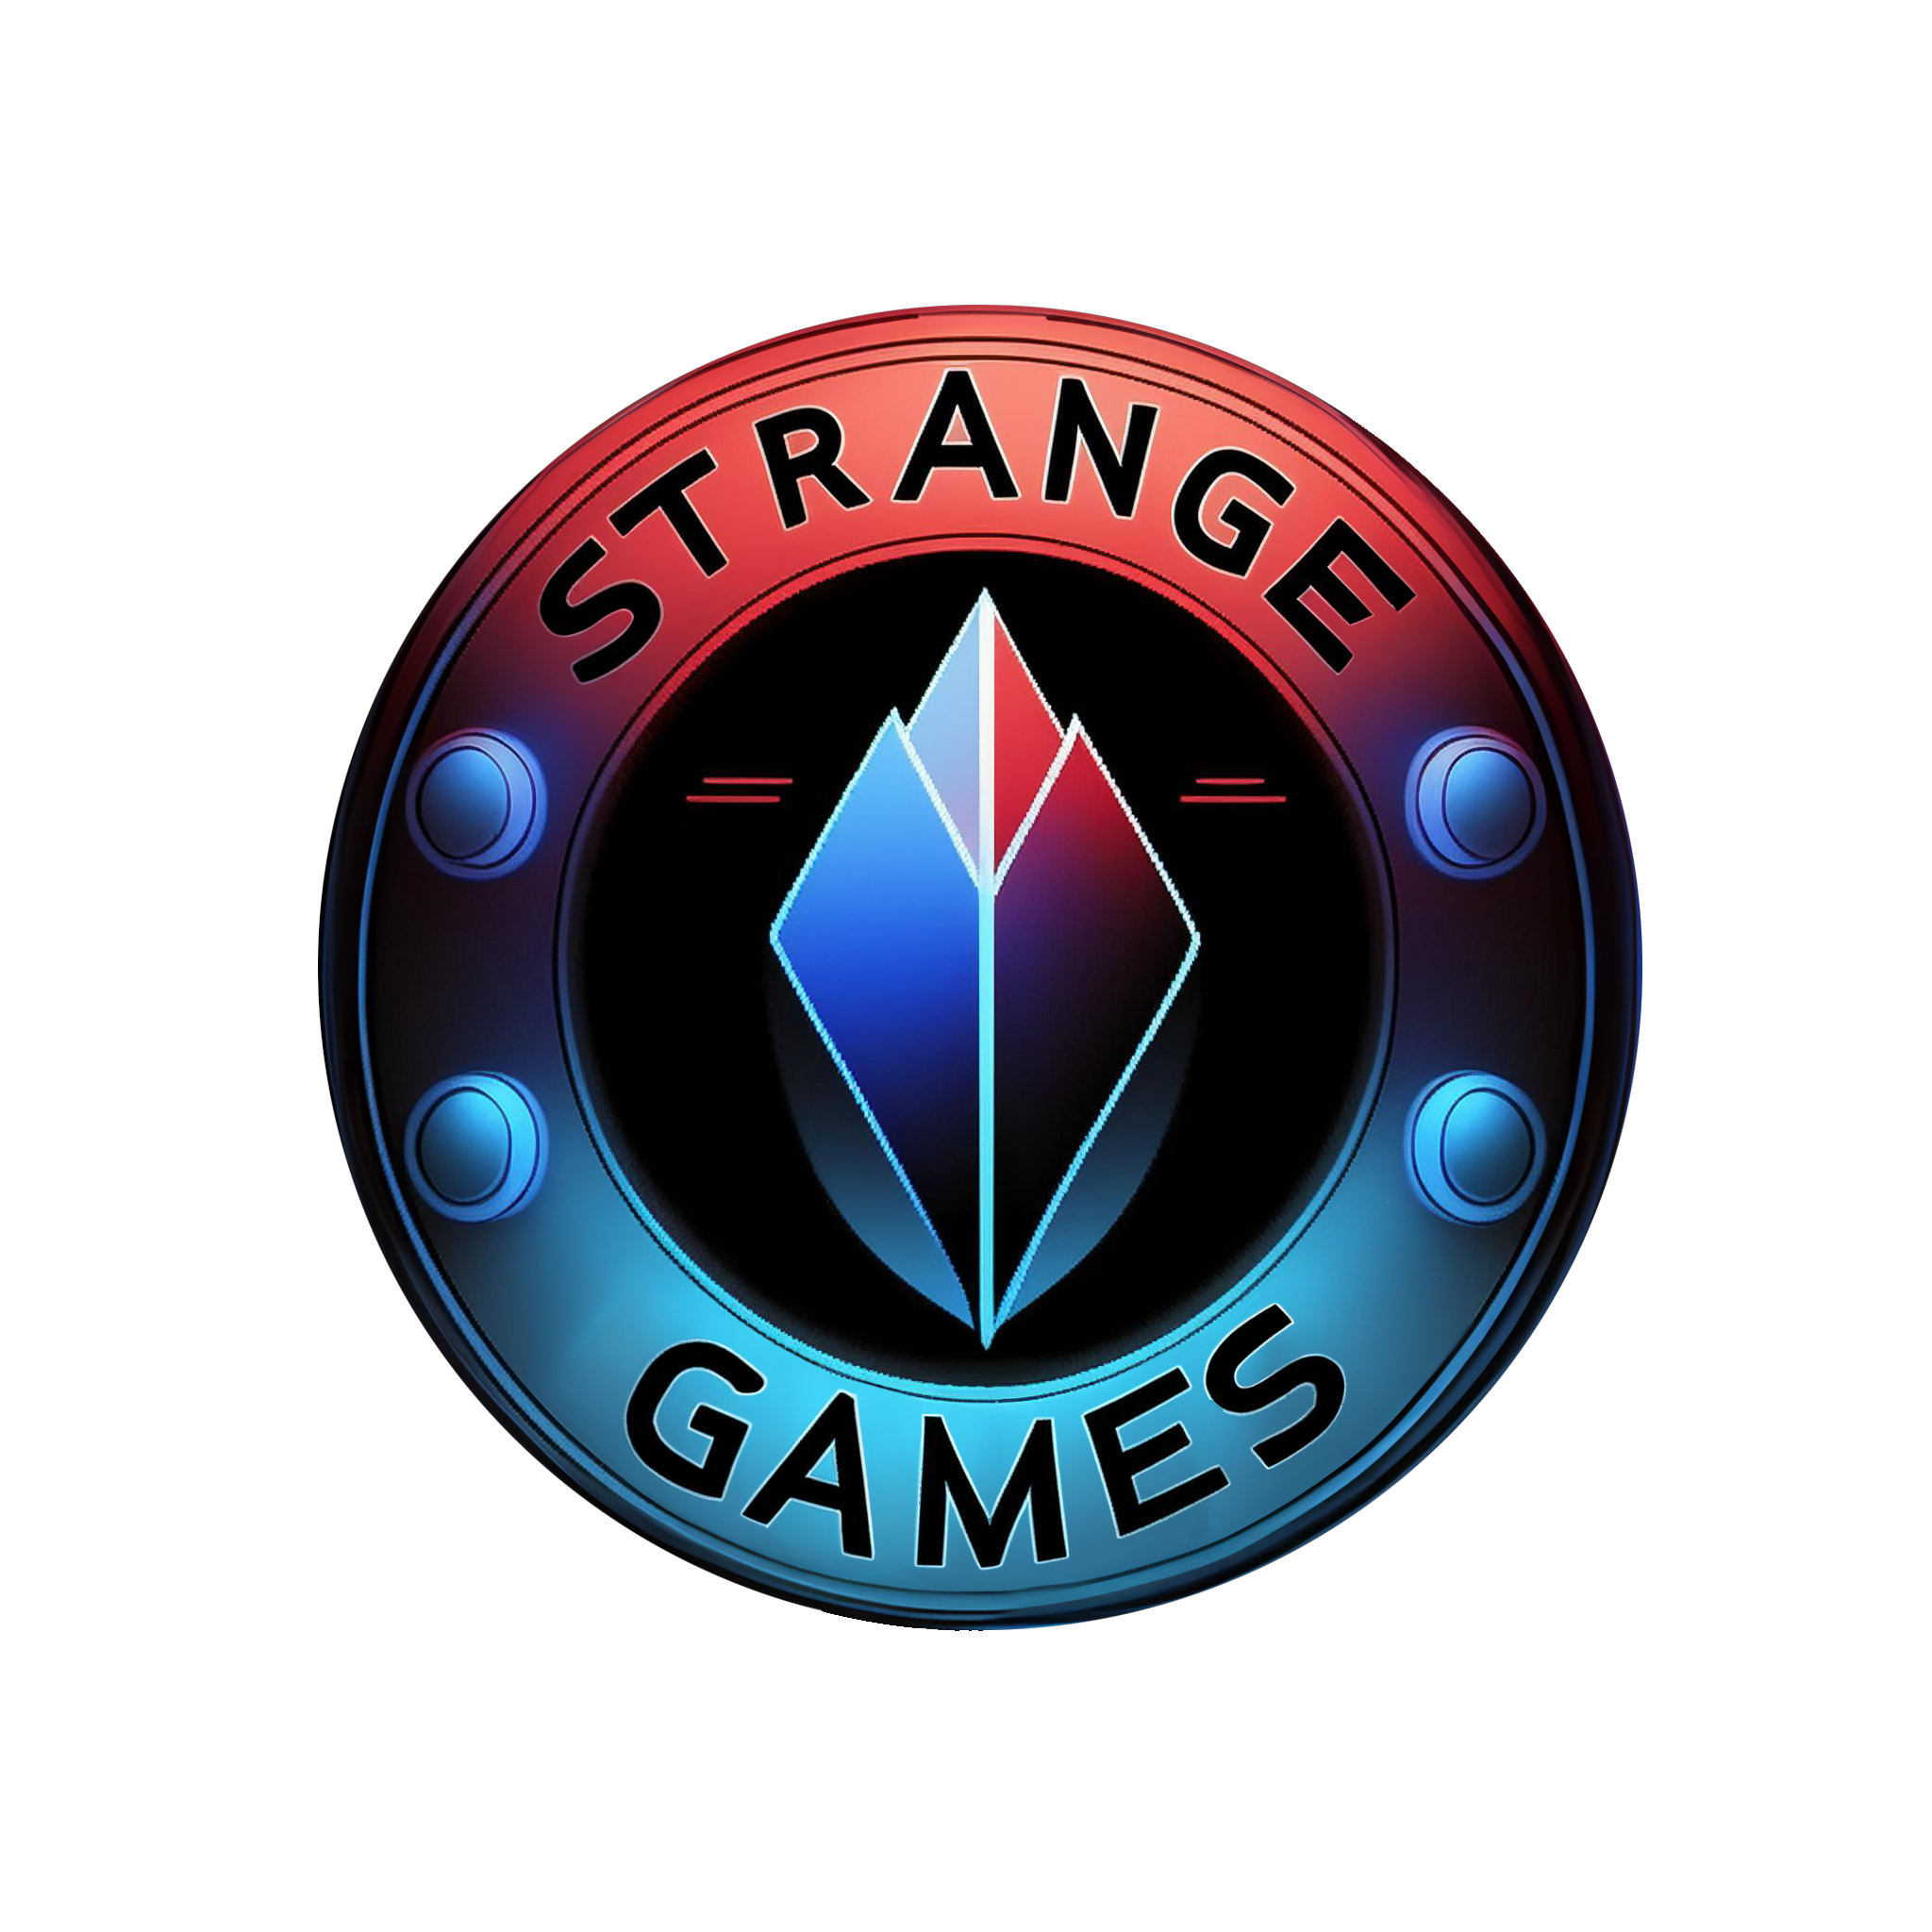 Strange Games Logo